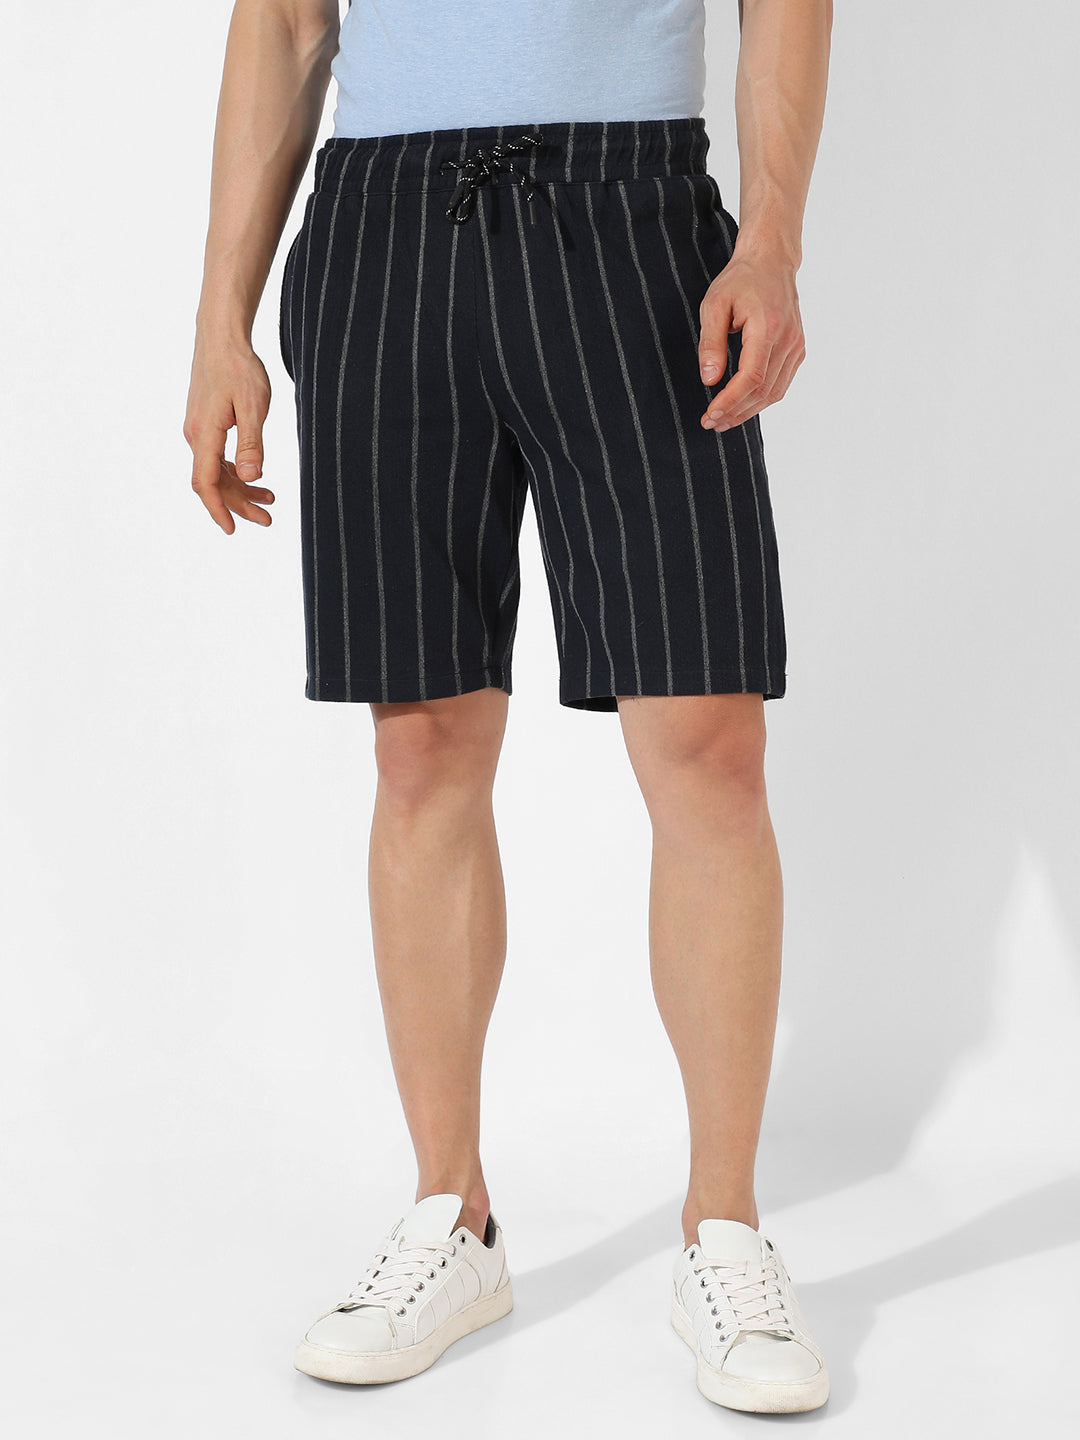 Halo Striped Shorts